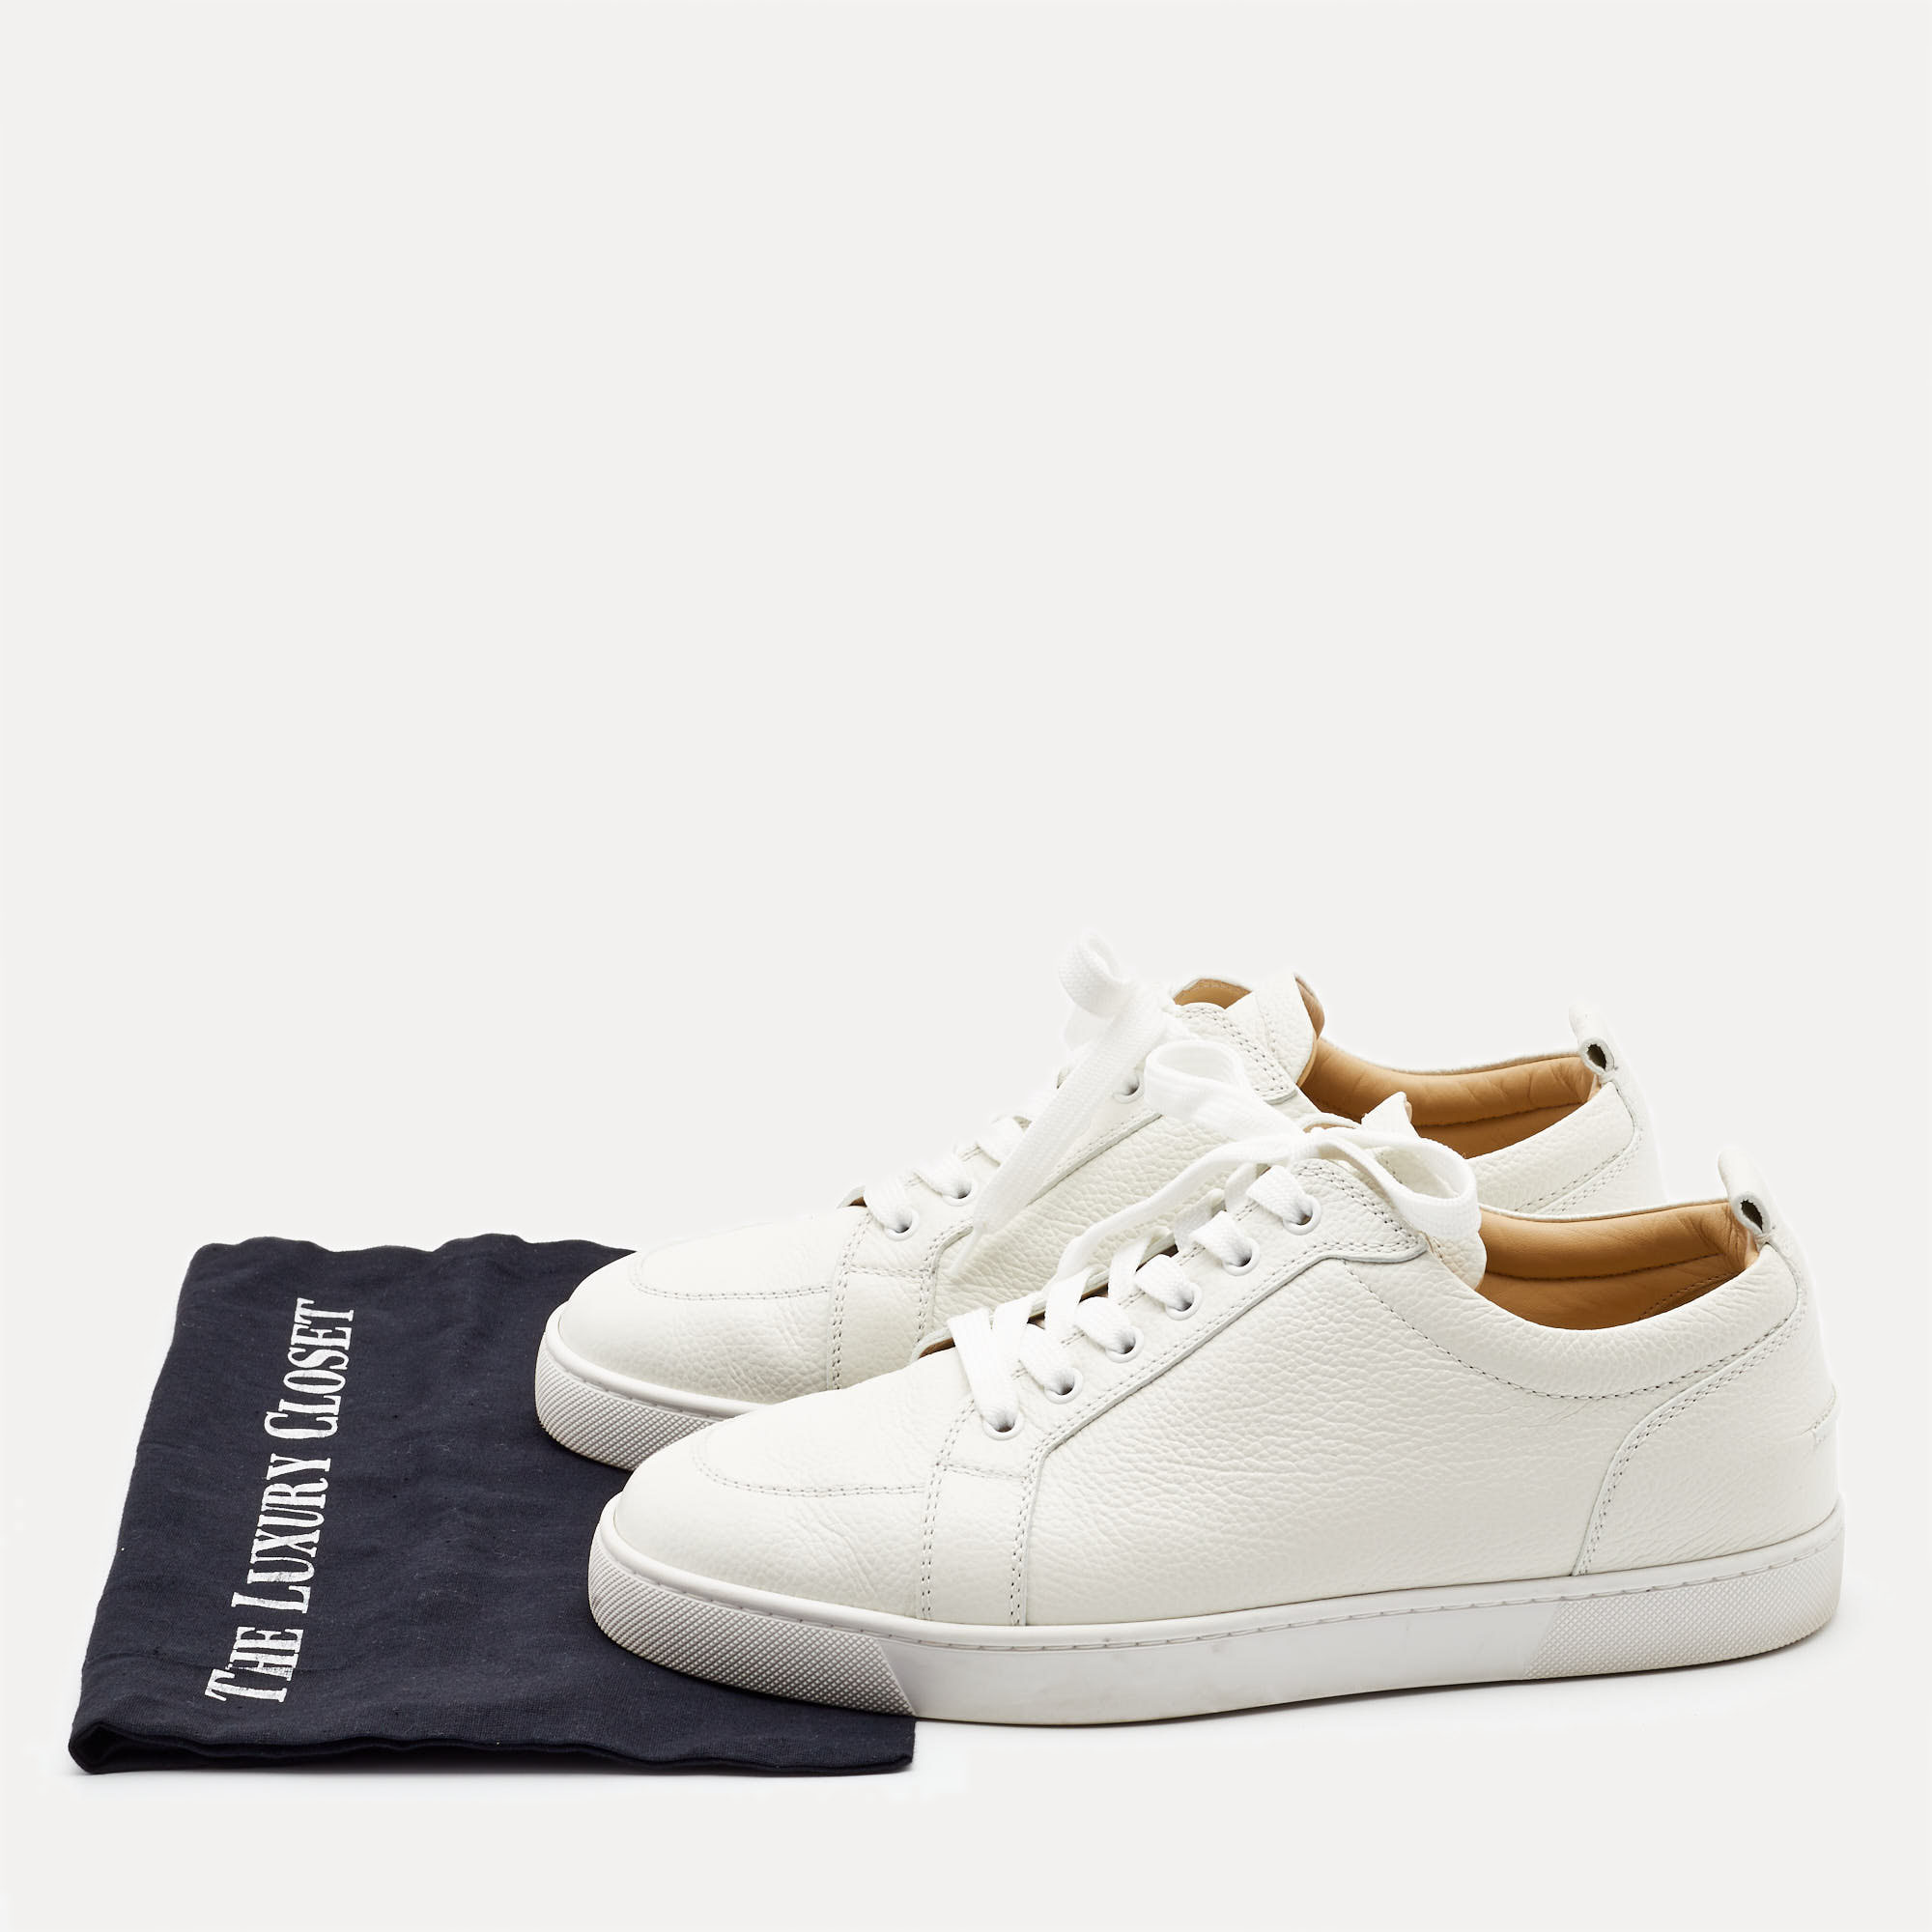 Christian Louboutin White Leather Rantulow Sneakers Size 43